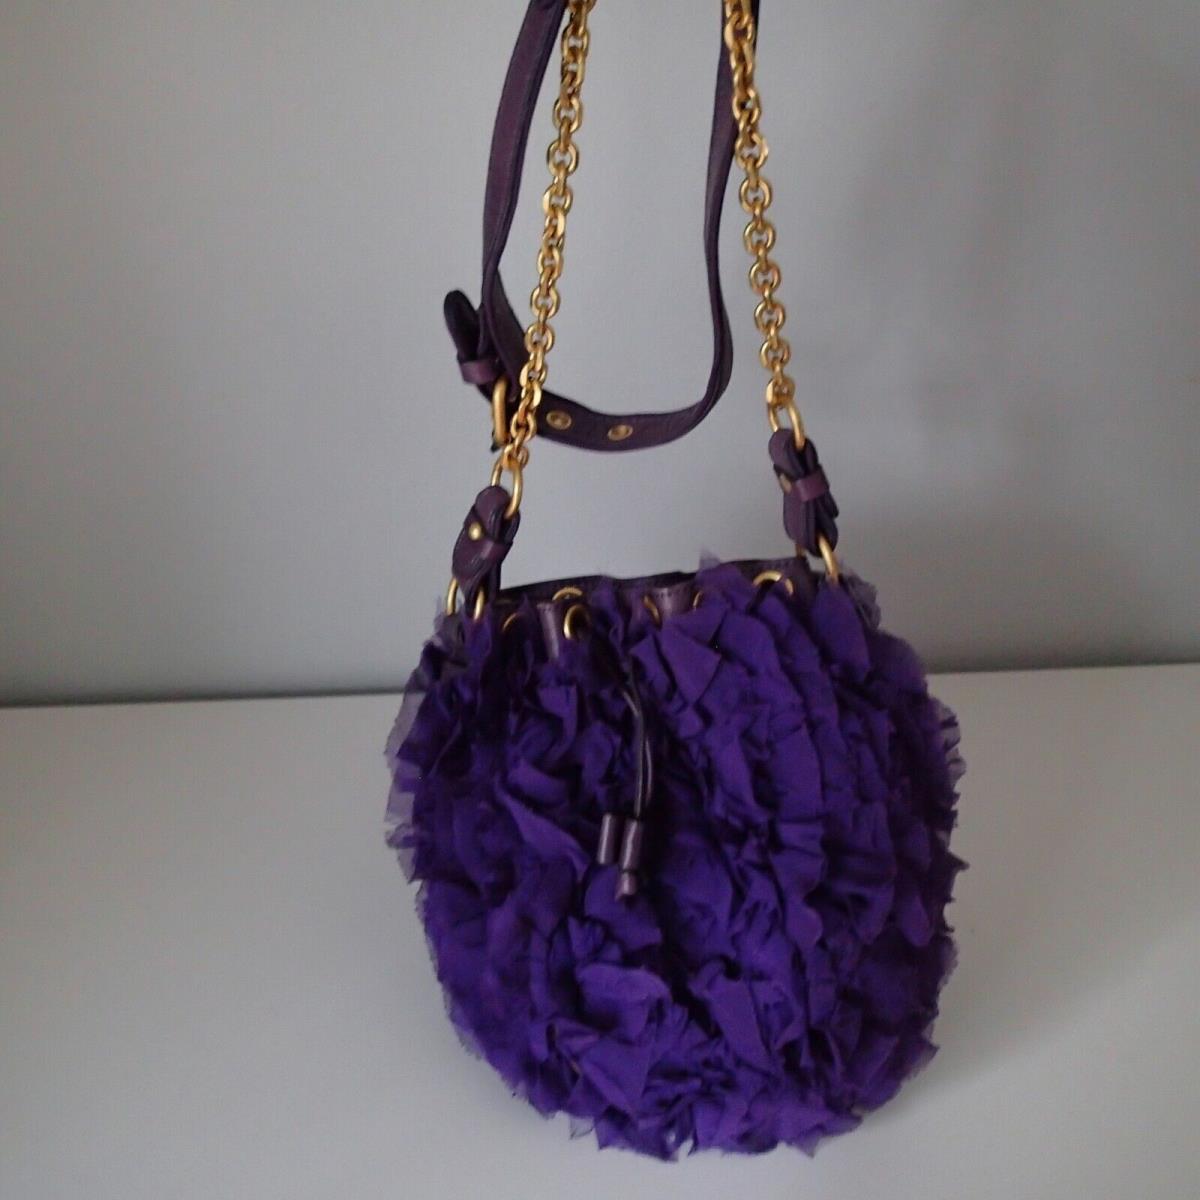 Juicy Couture Purple Chiffon Purse Party Pouchette Crossbody Swing Bag Beach